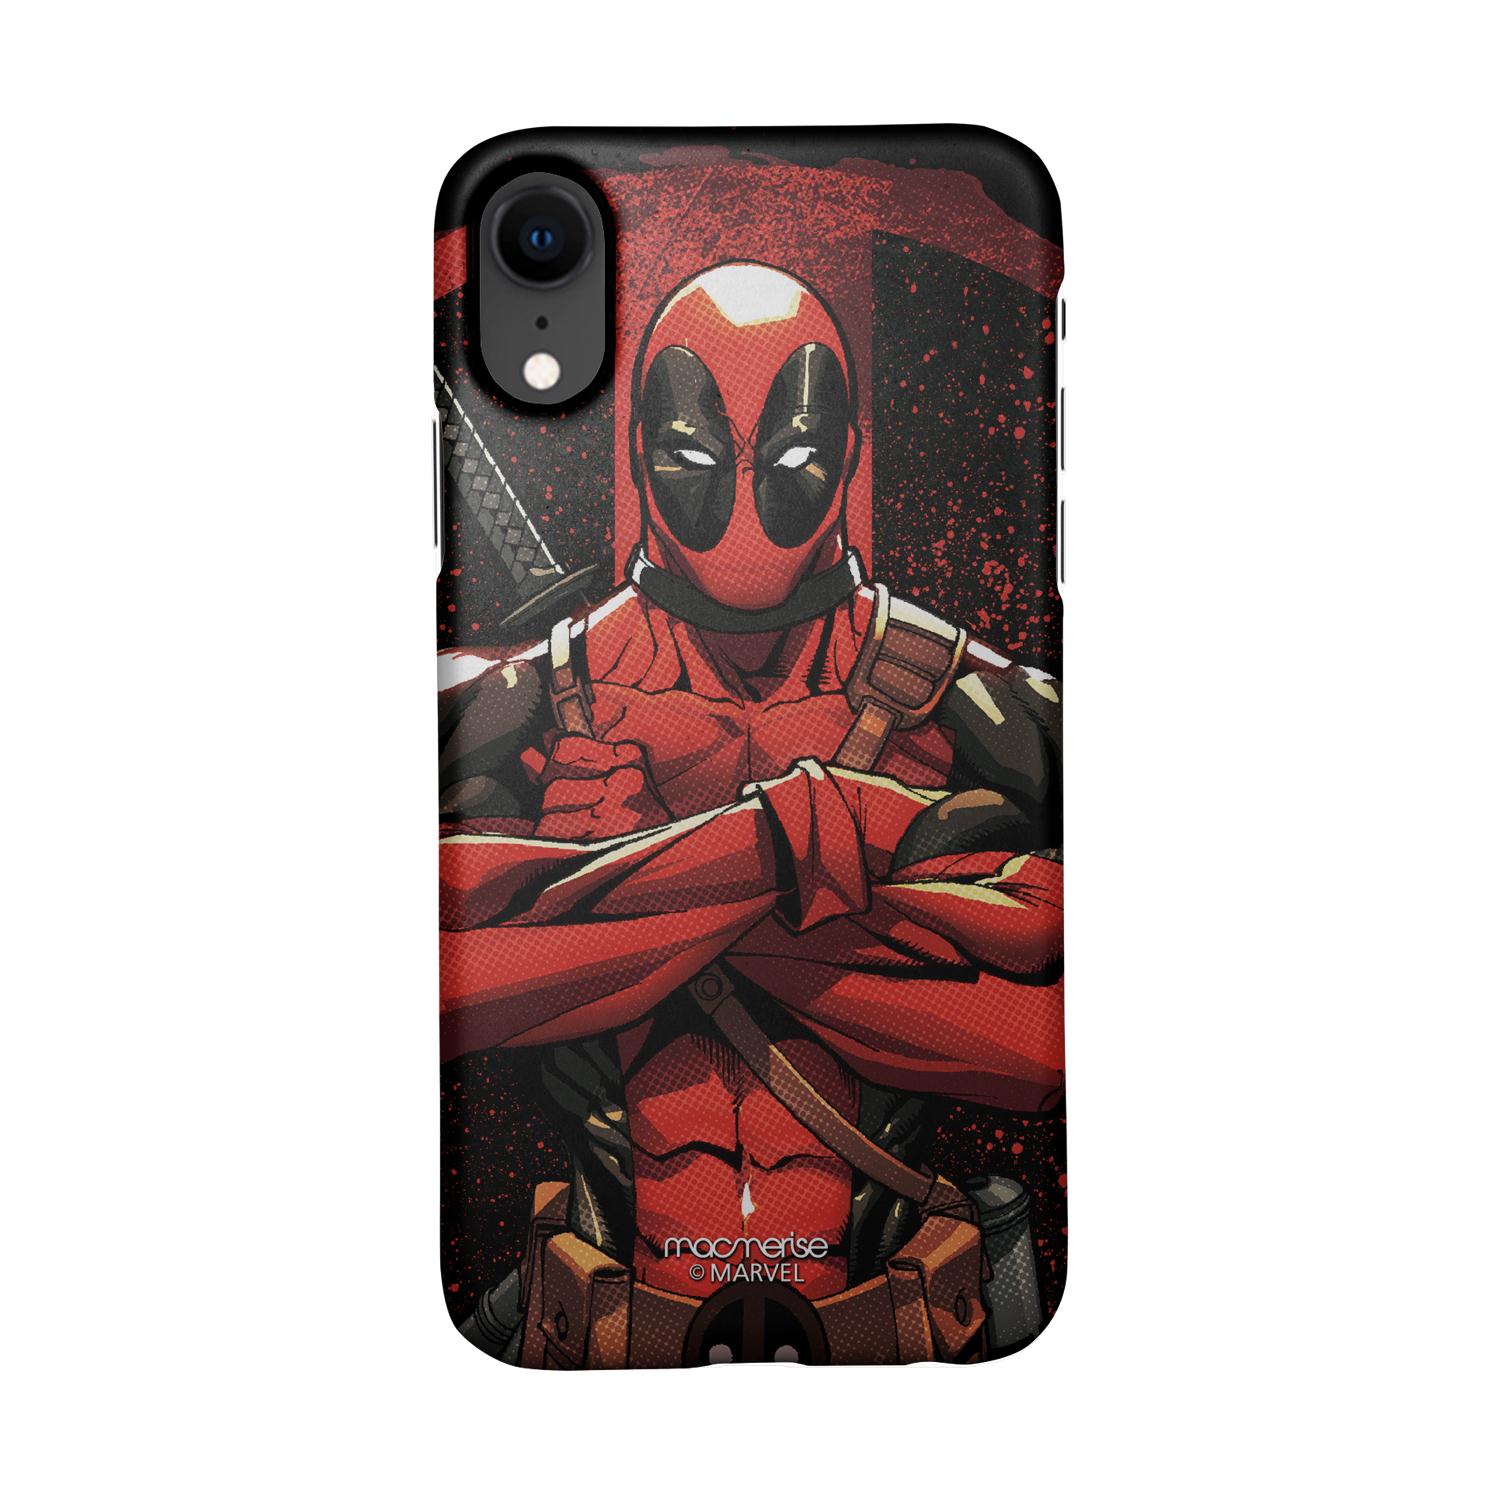 Buy Deadpool Stance - Sleek Phone Case for iPhone XR Online